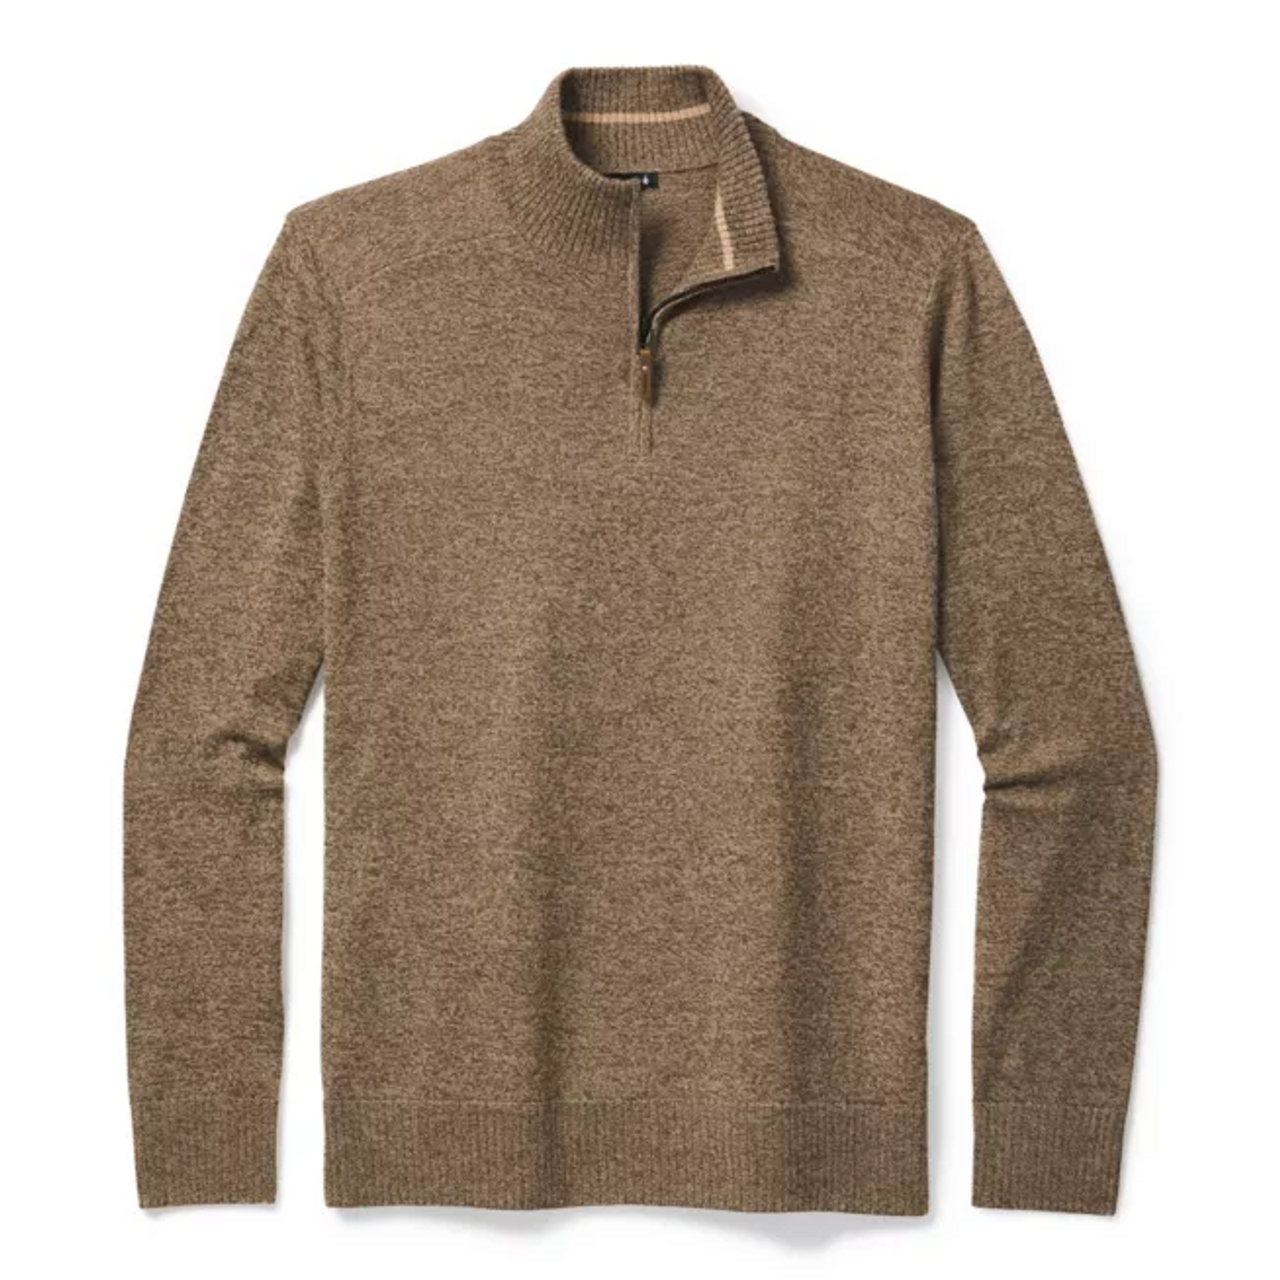 Smartwool Men's Sparwood Half Zip Sweater - Camel/Military Olive Heather